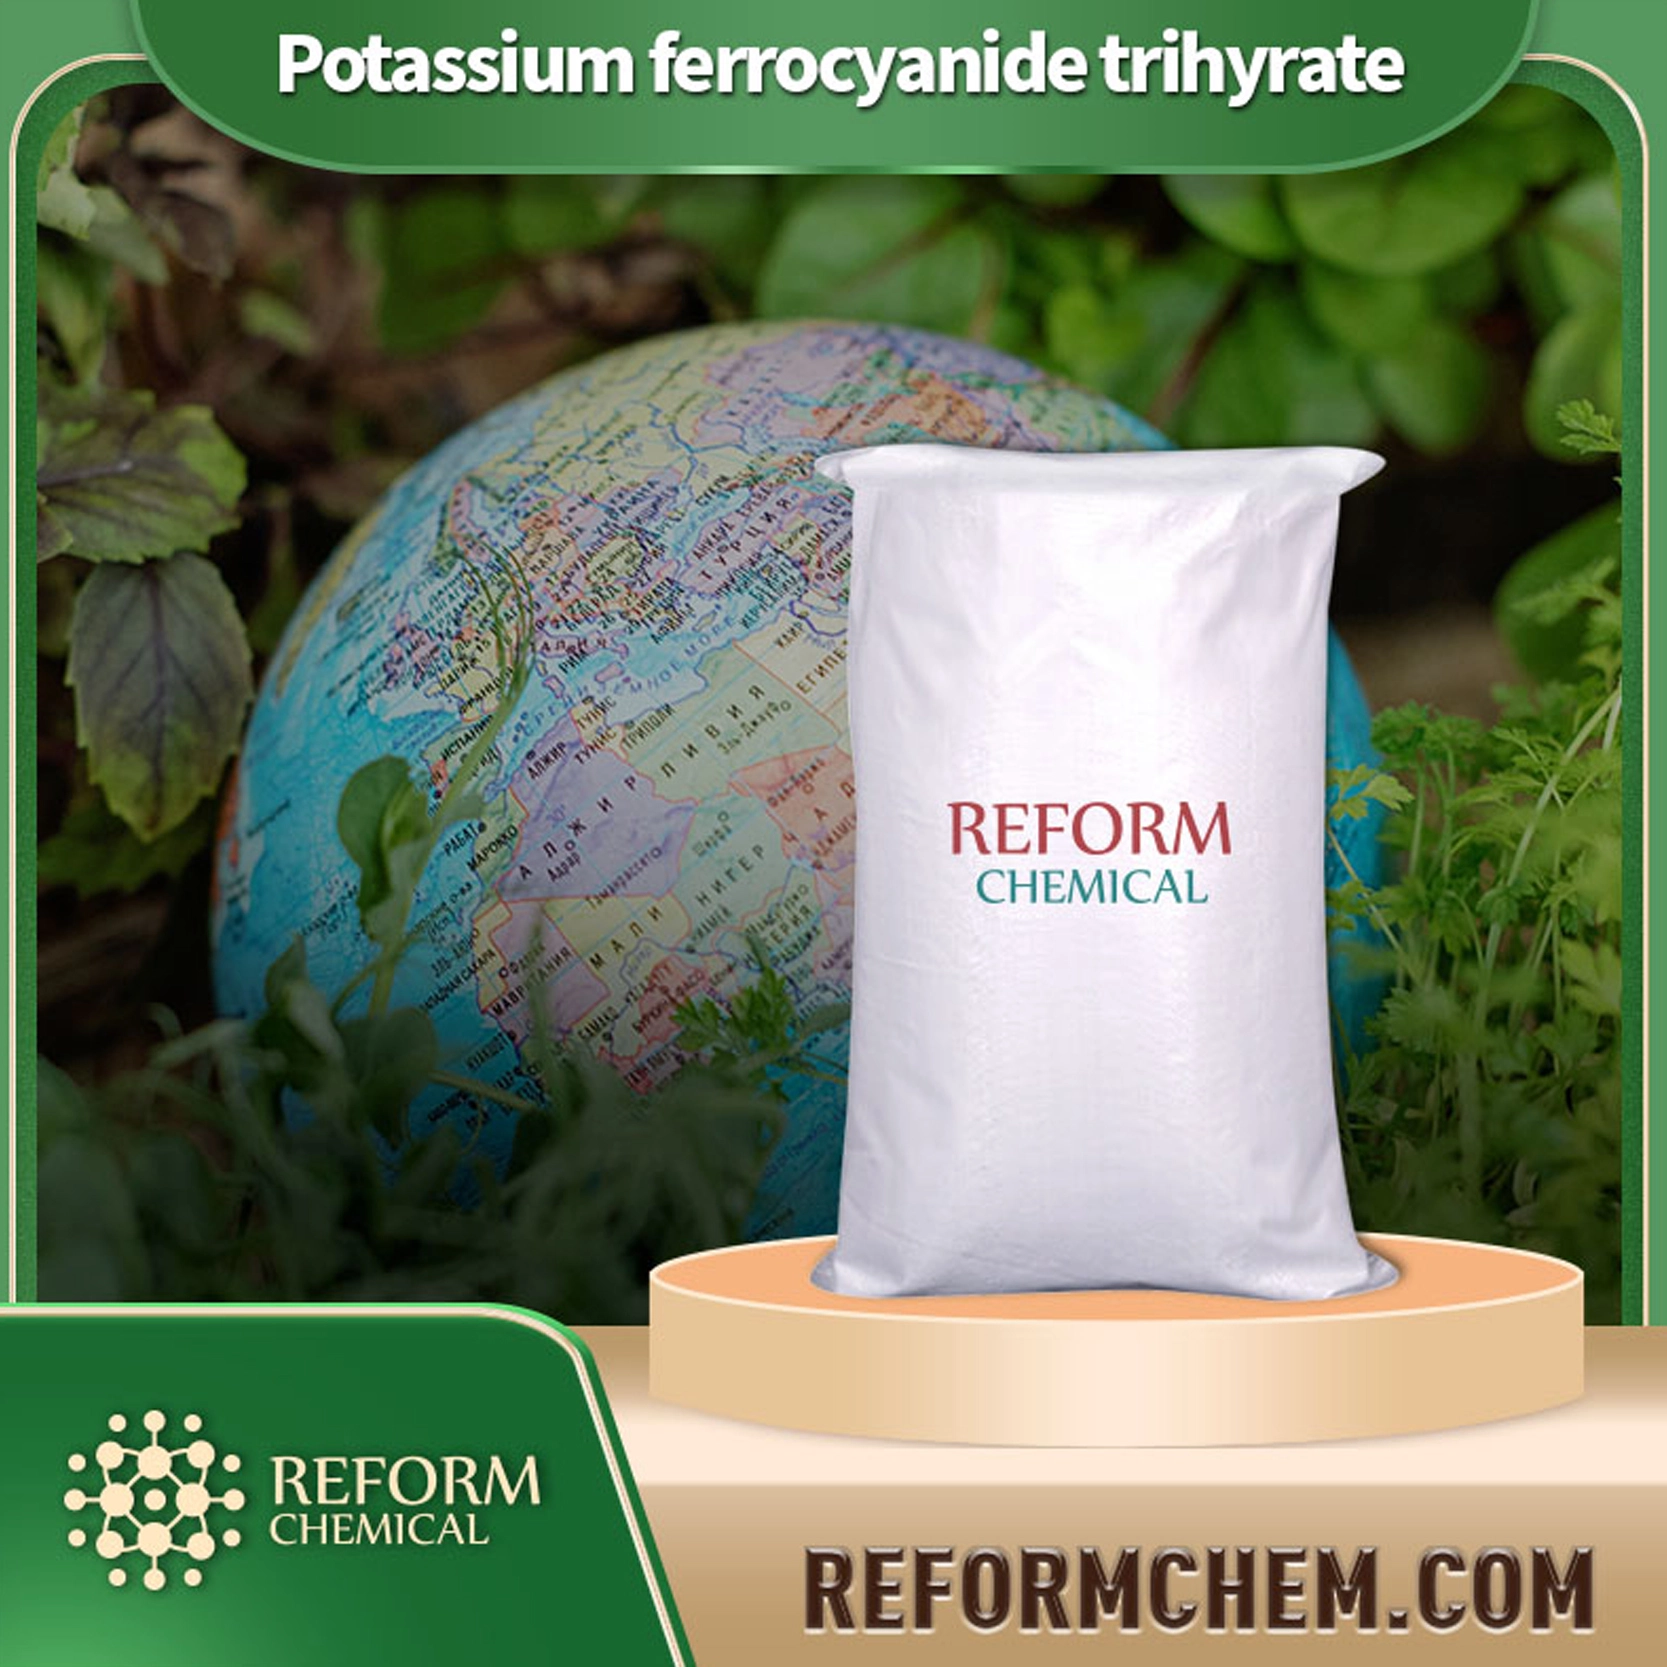 Potassium ferrocyanide trihyrate